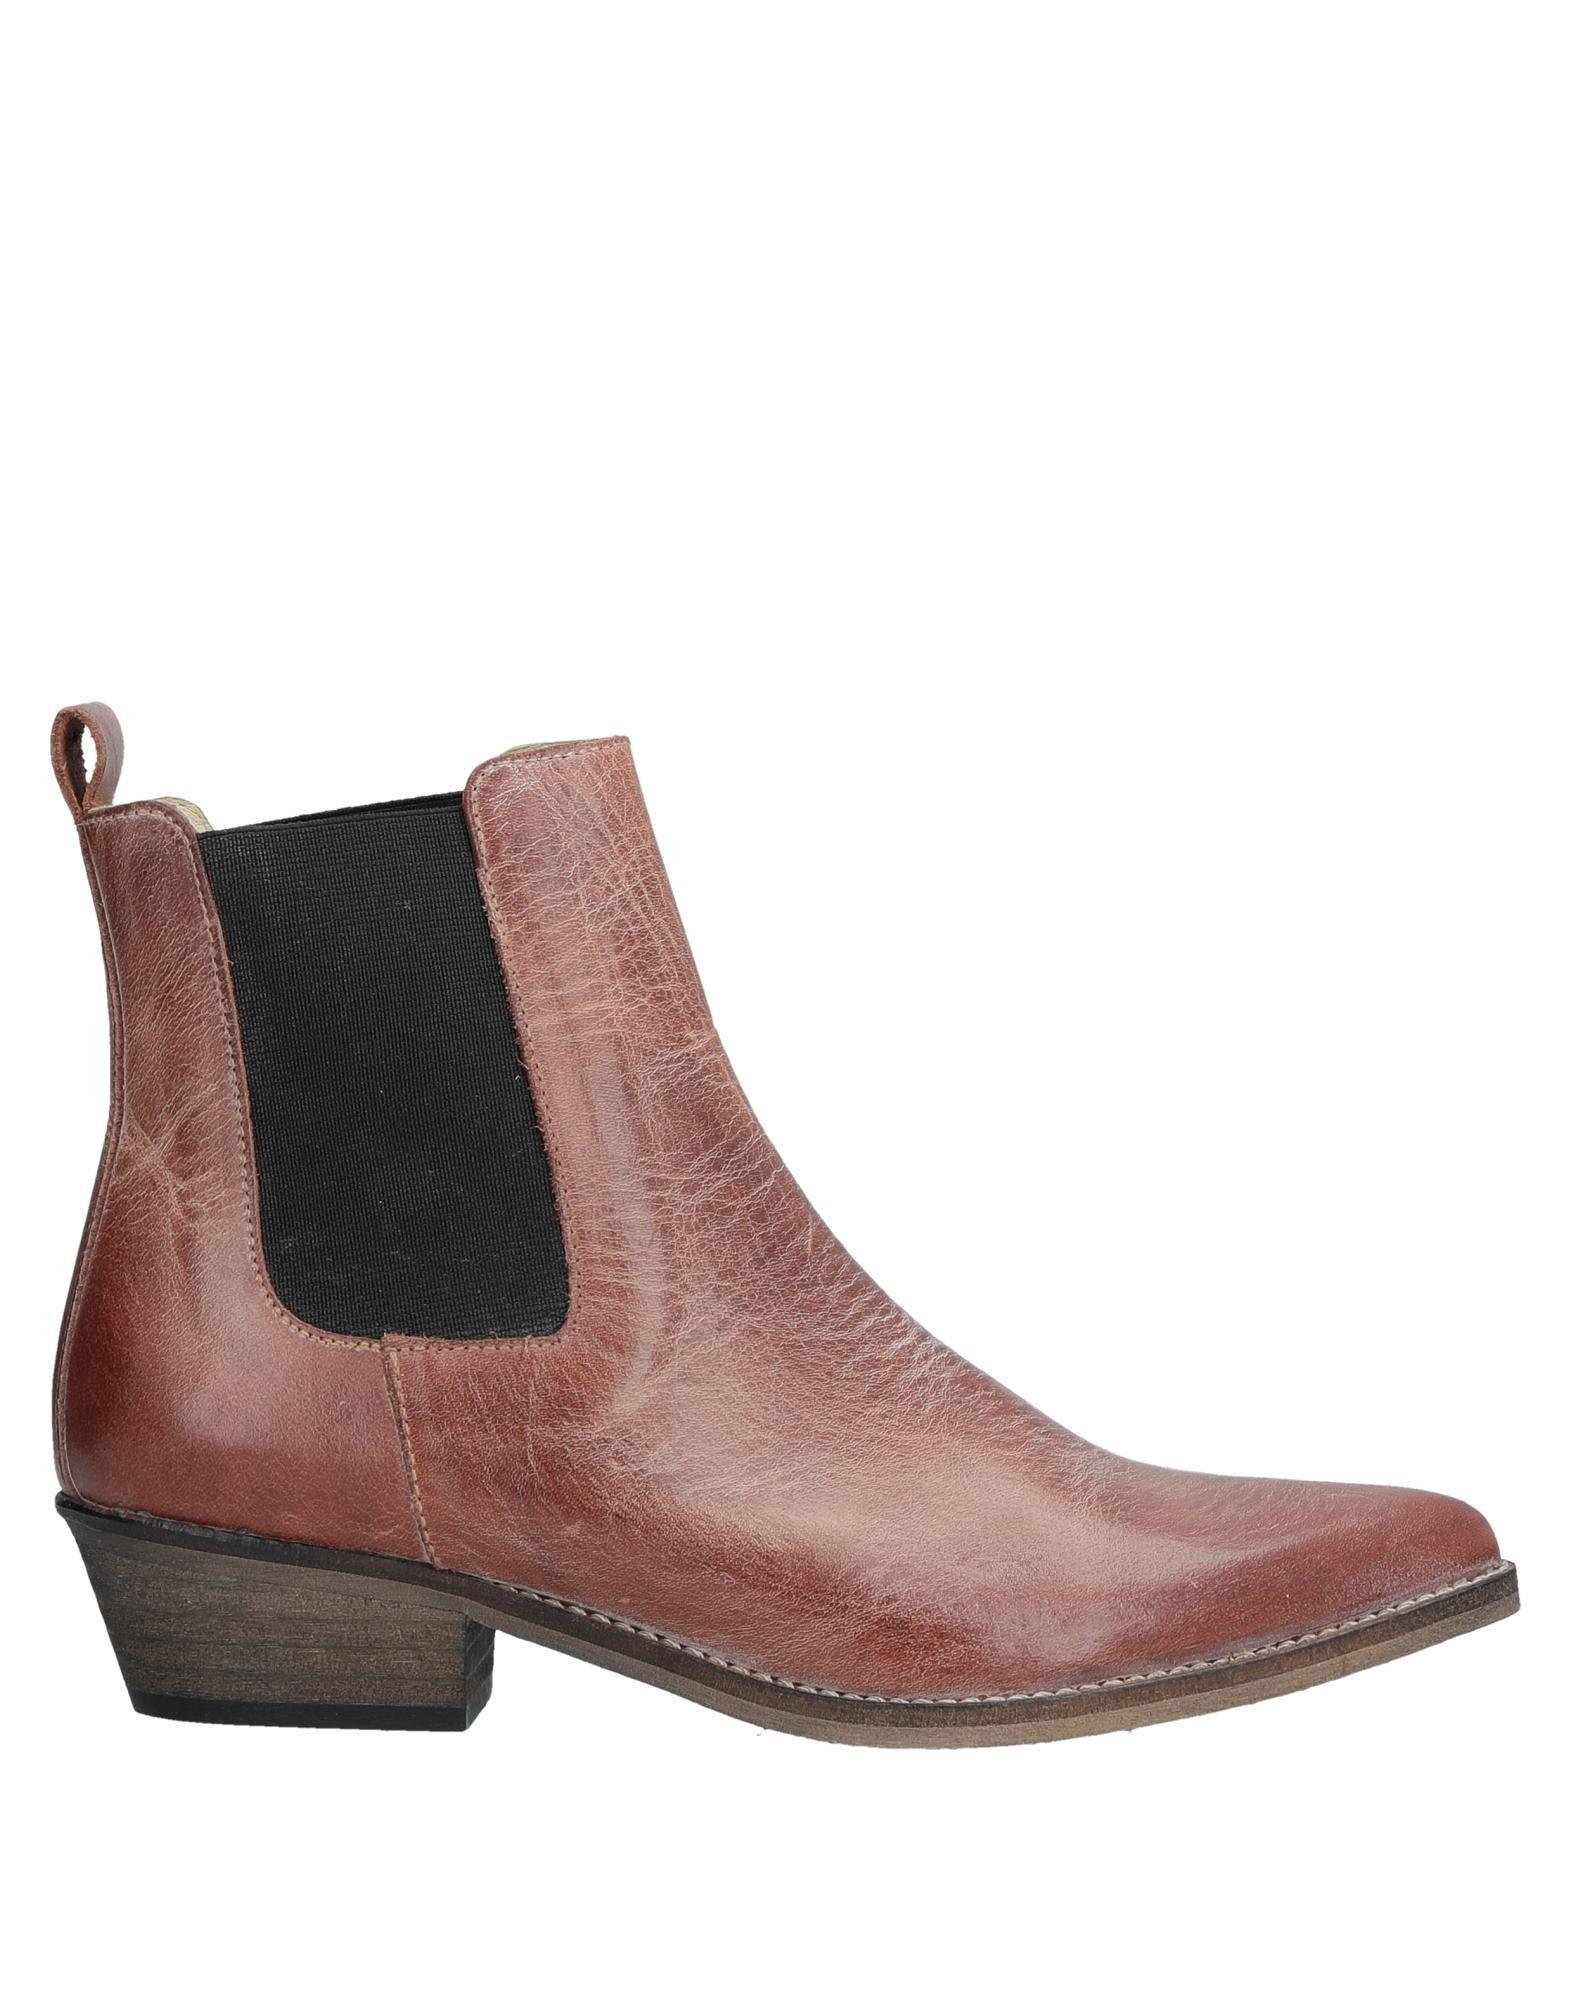 ivylee copenhagen Leather Ankle Boots in Tan (Brown) - Lyst